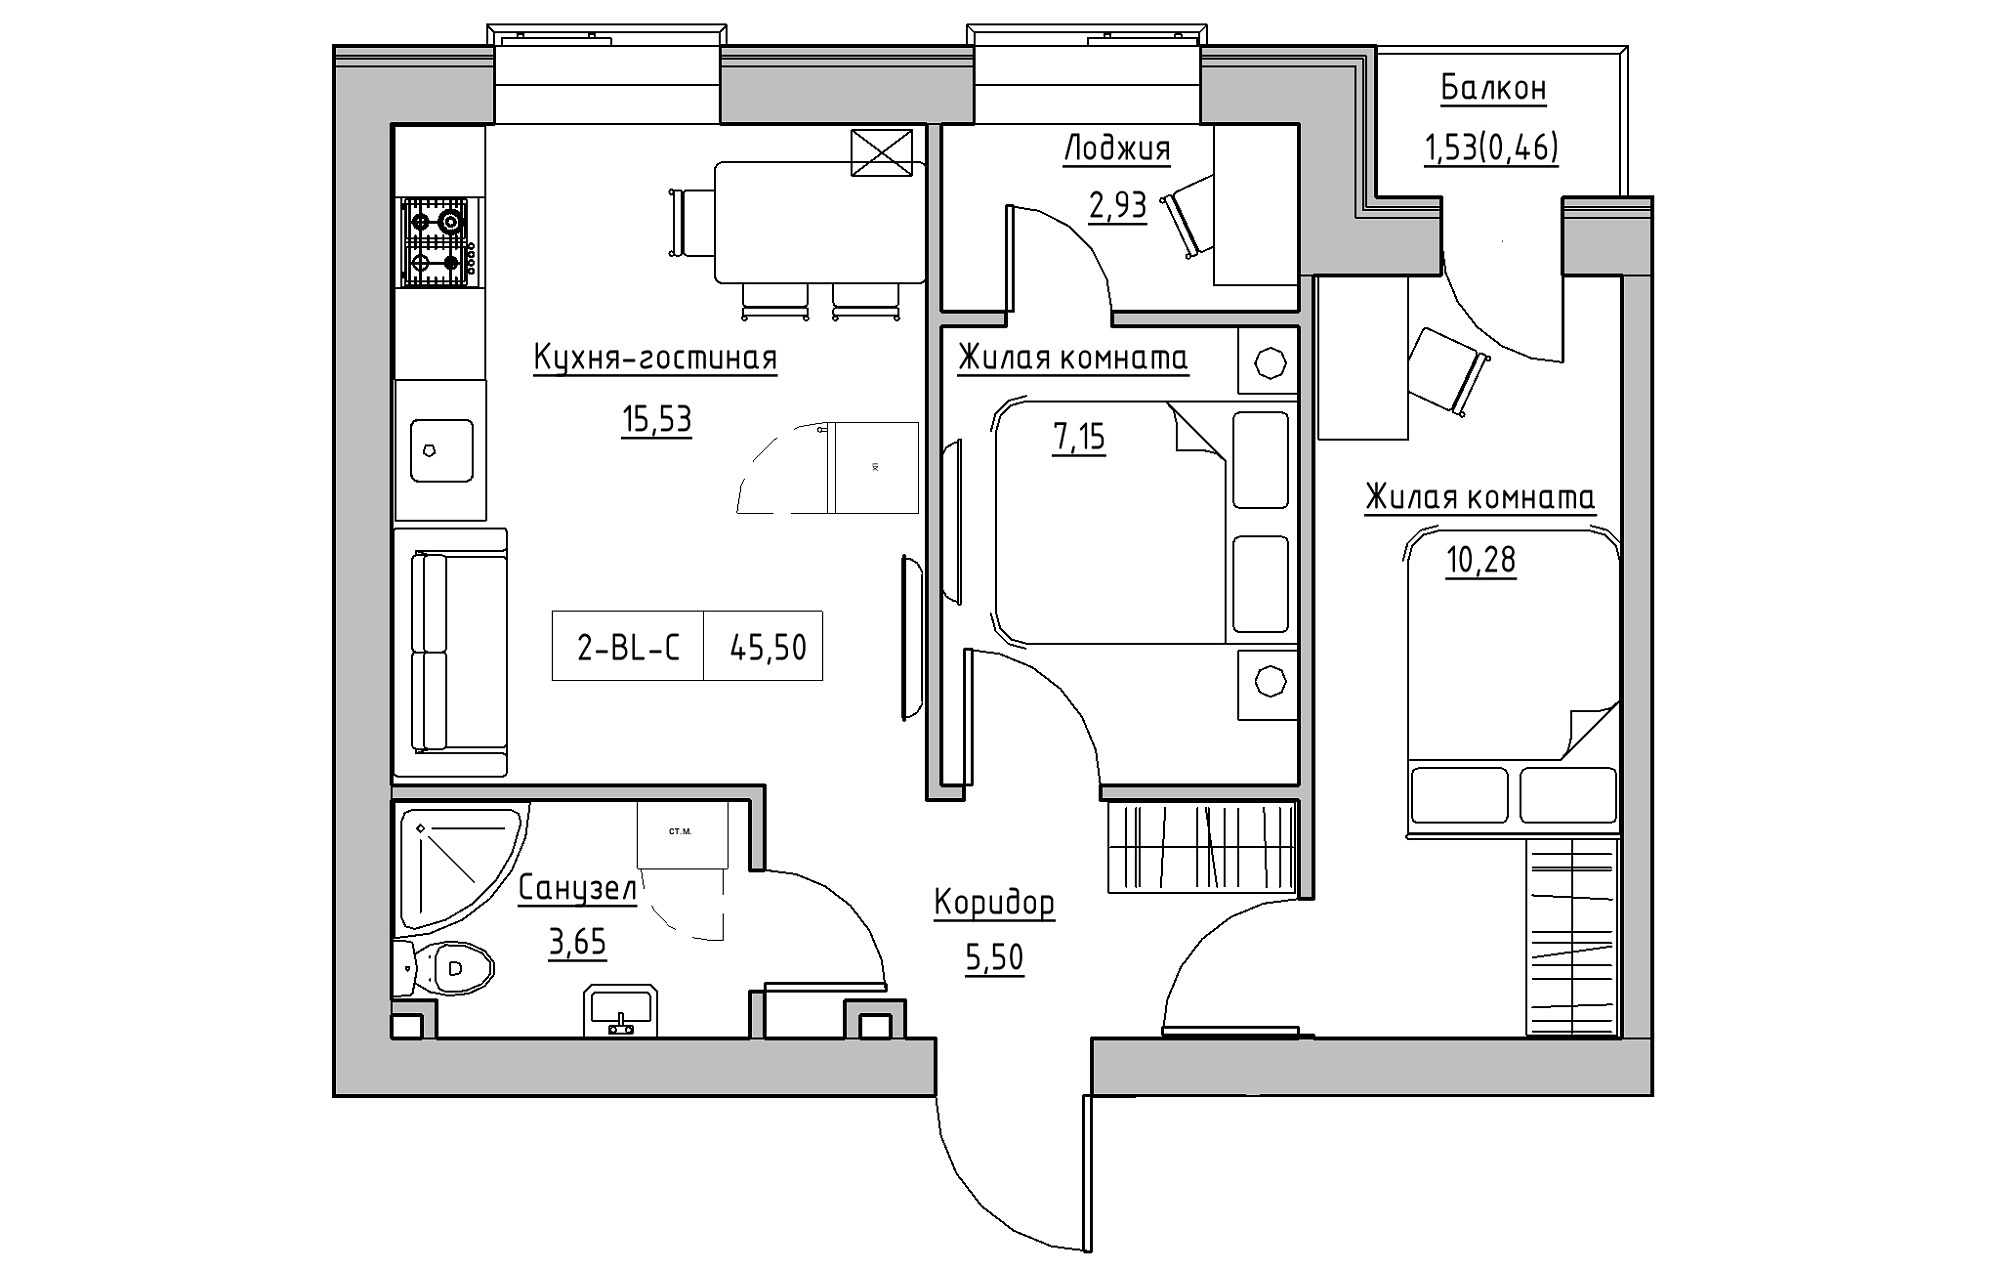 Planning 2-rm flats area 45.5m2, KS-018-04/0008.